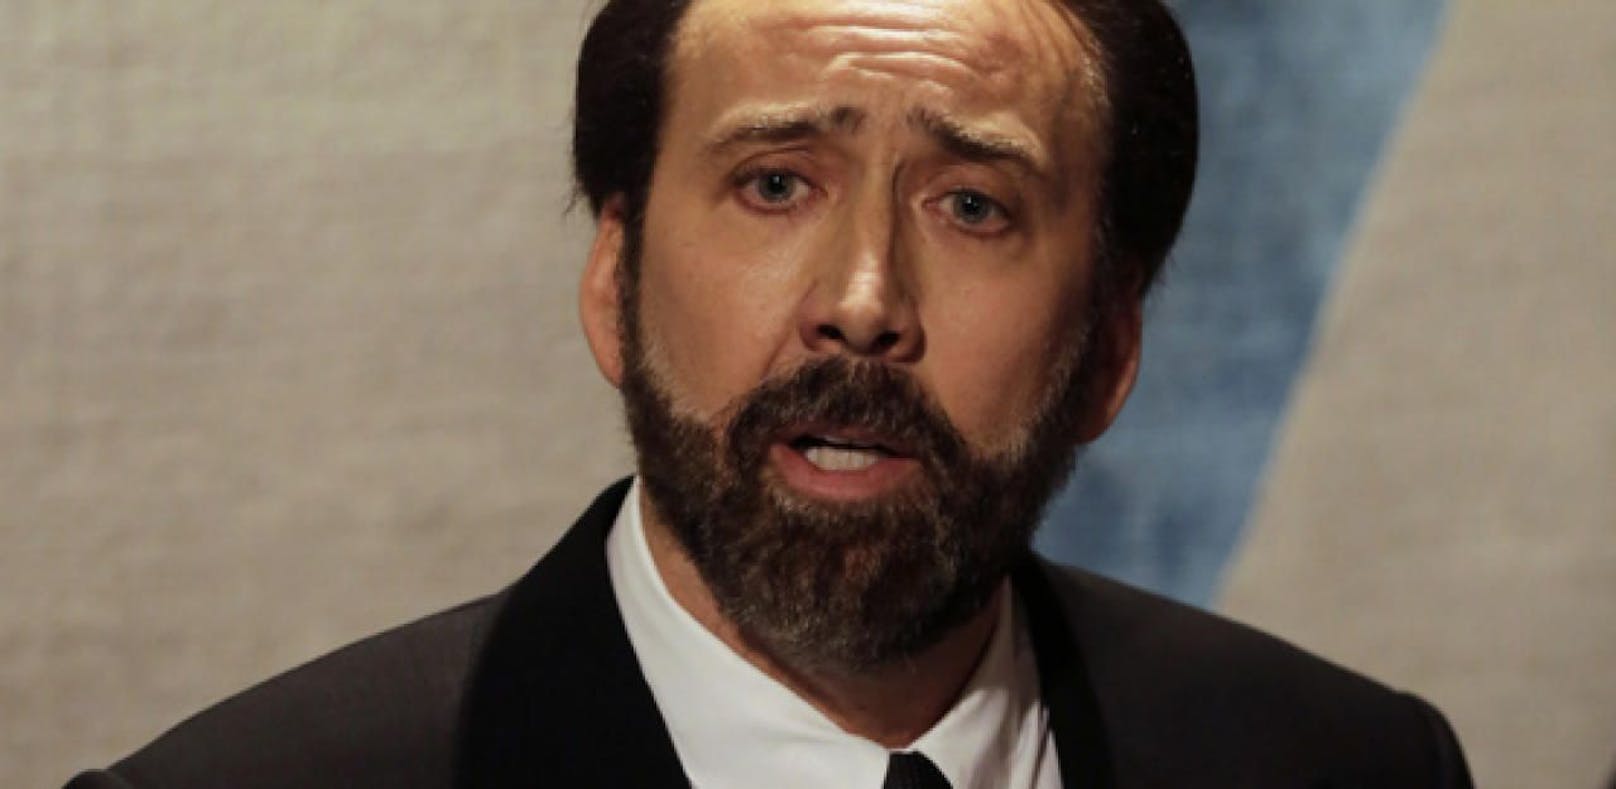 Nicolas Cage: Flug nach LA statt OP in Bulgarien